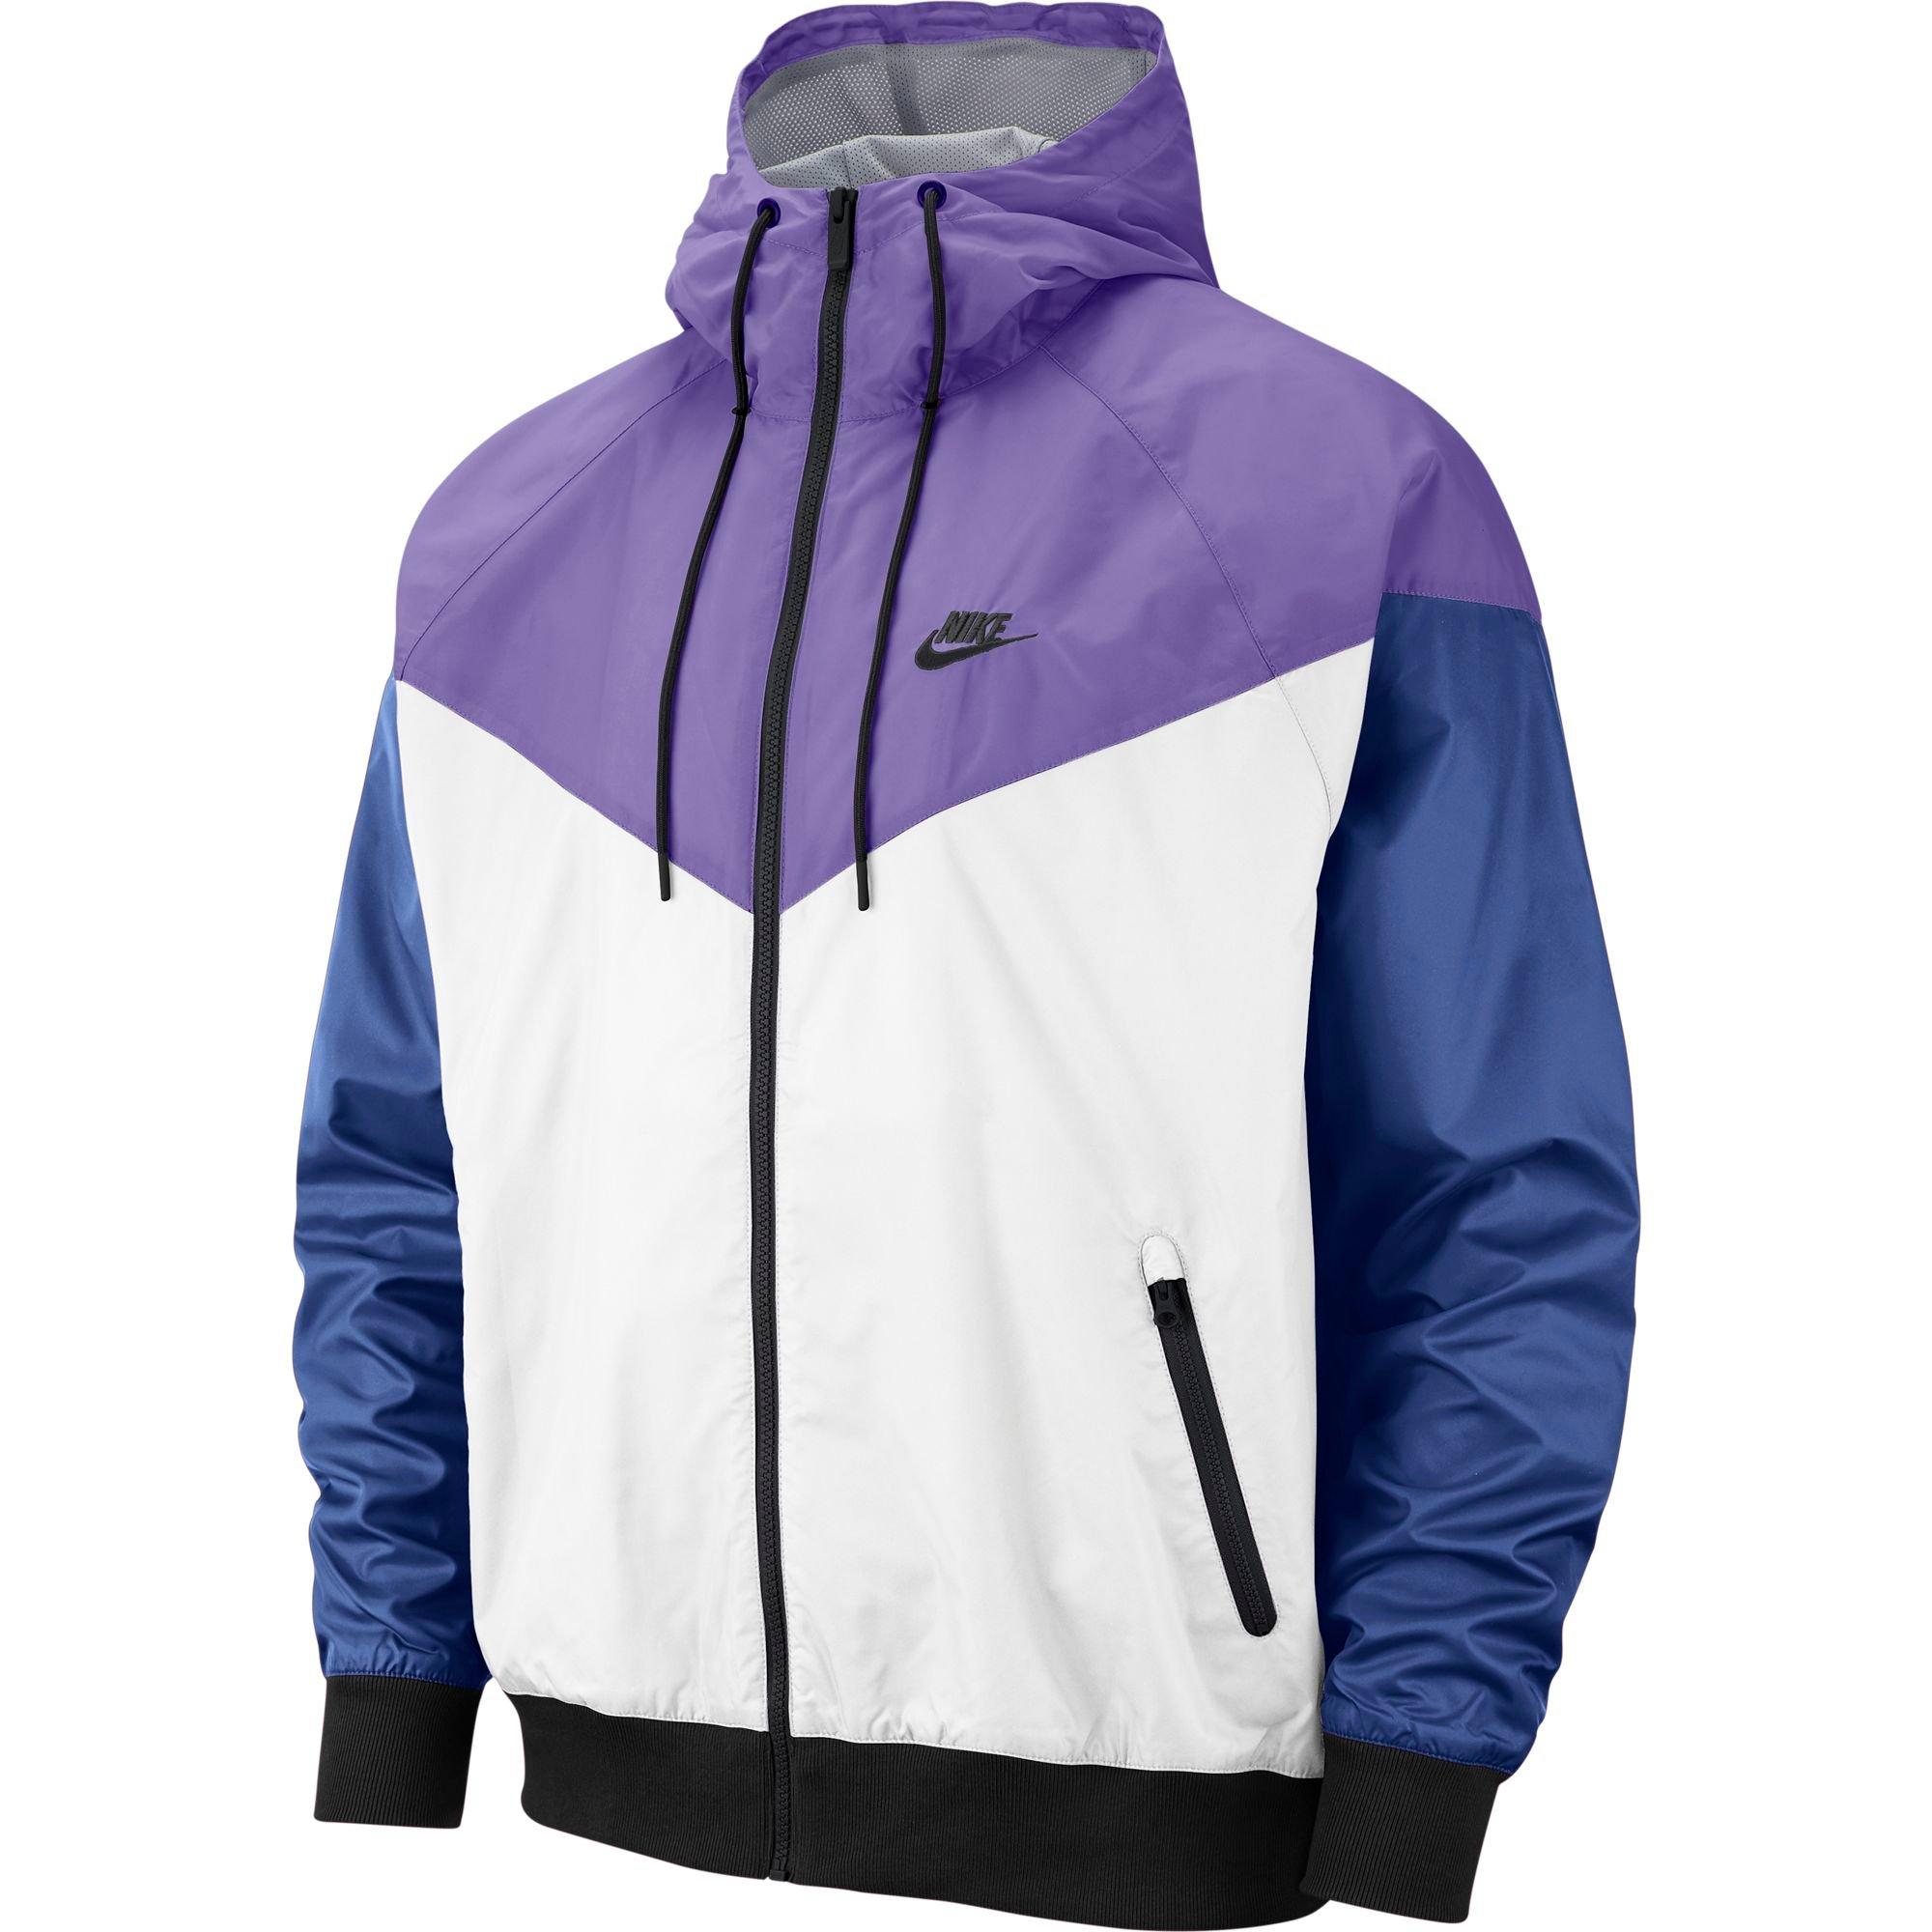 white and purple nike jacket